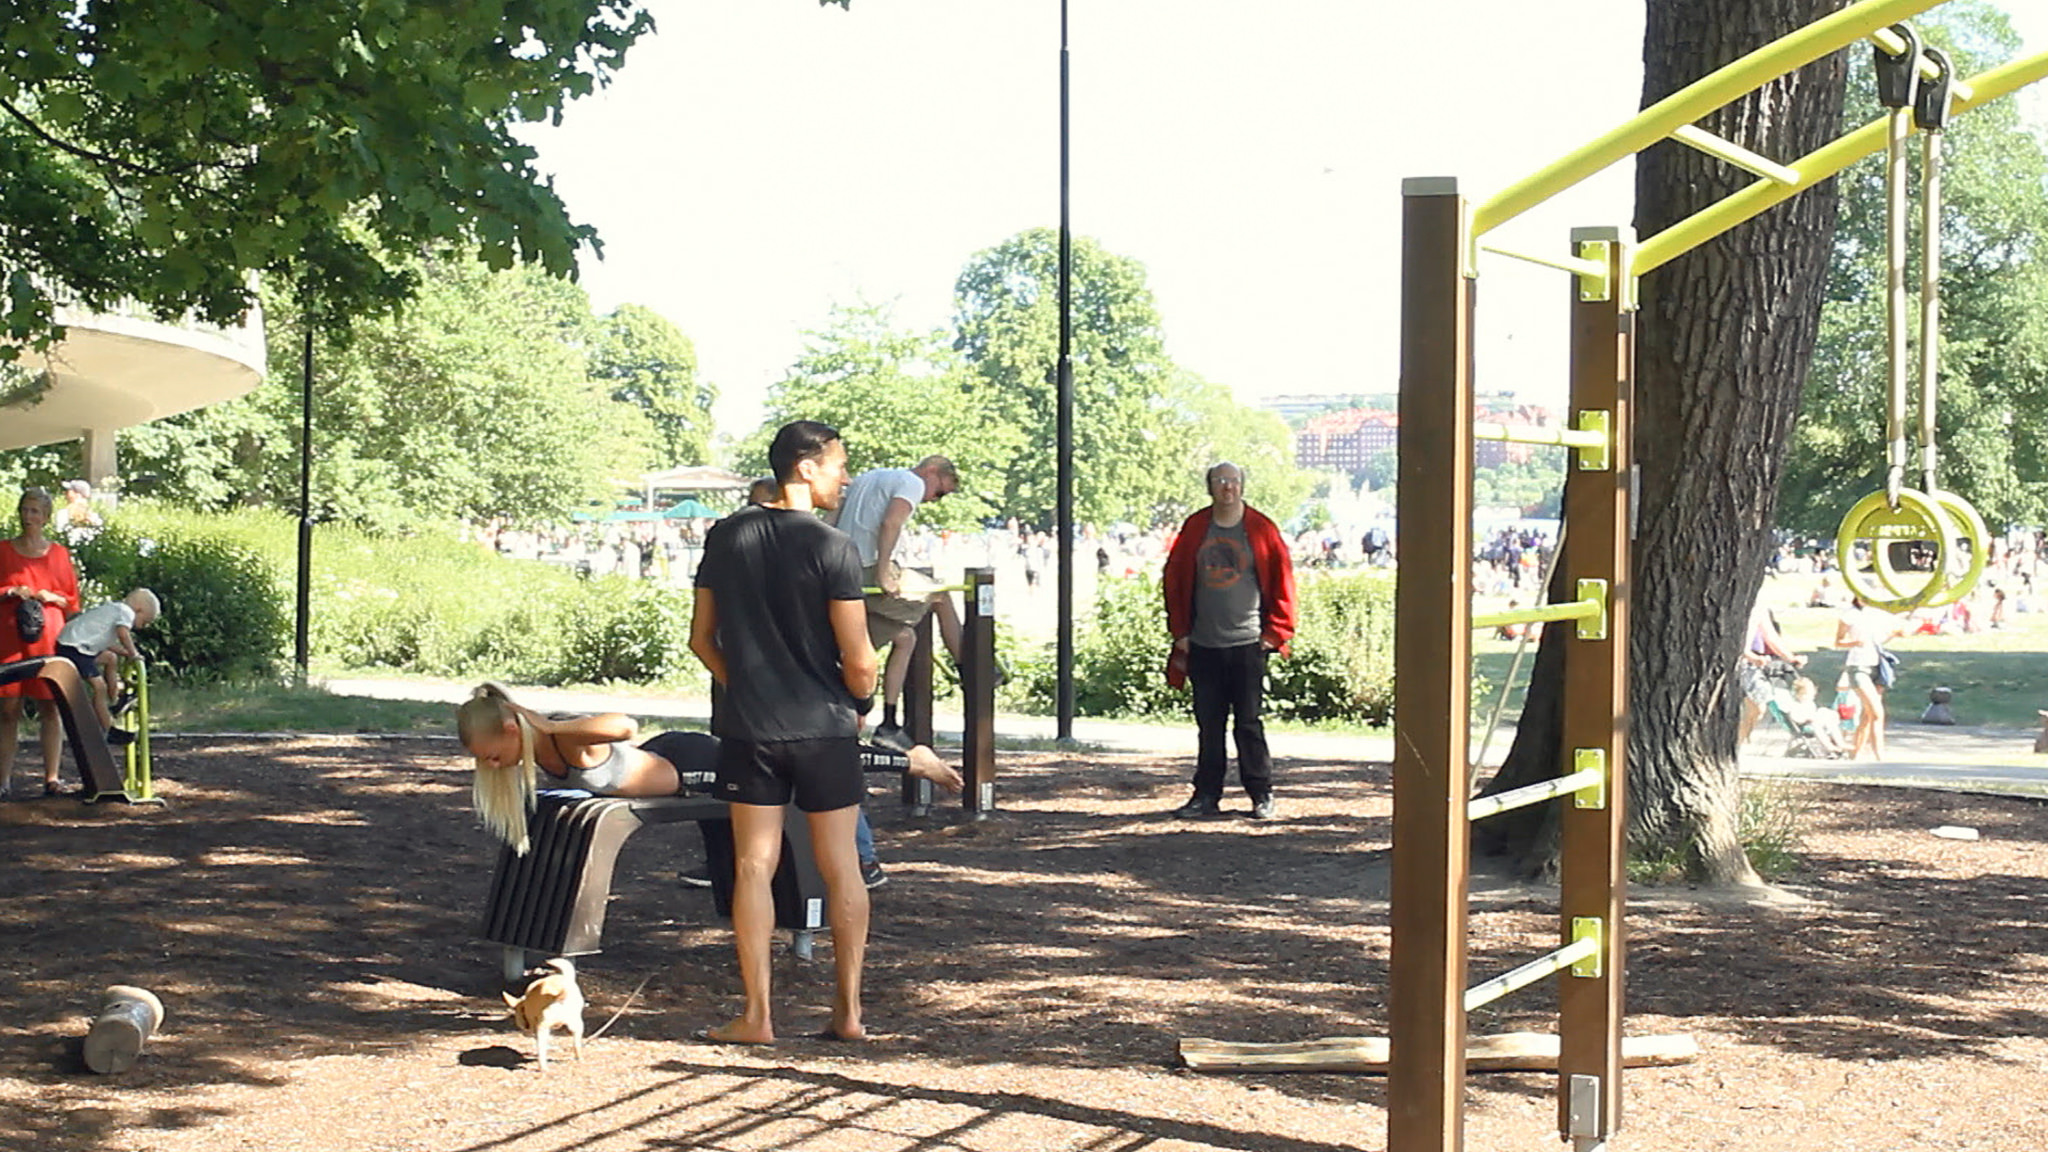 outdoor gym Rålamshovsparken al fresco open air Stockholm exercise active